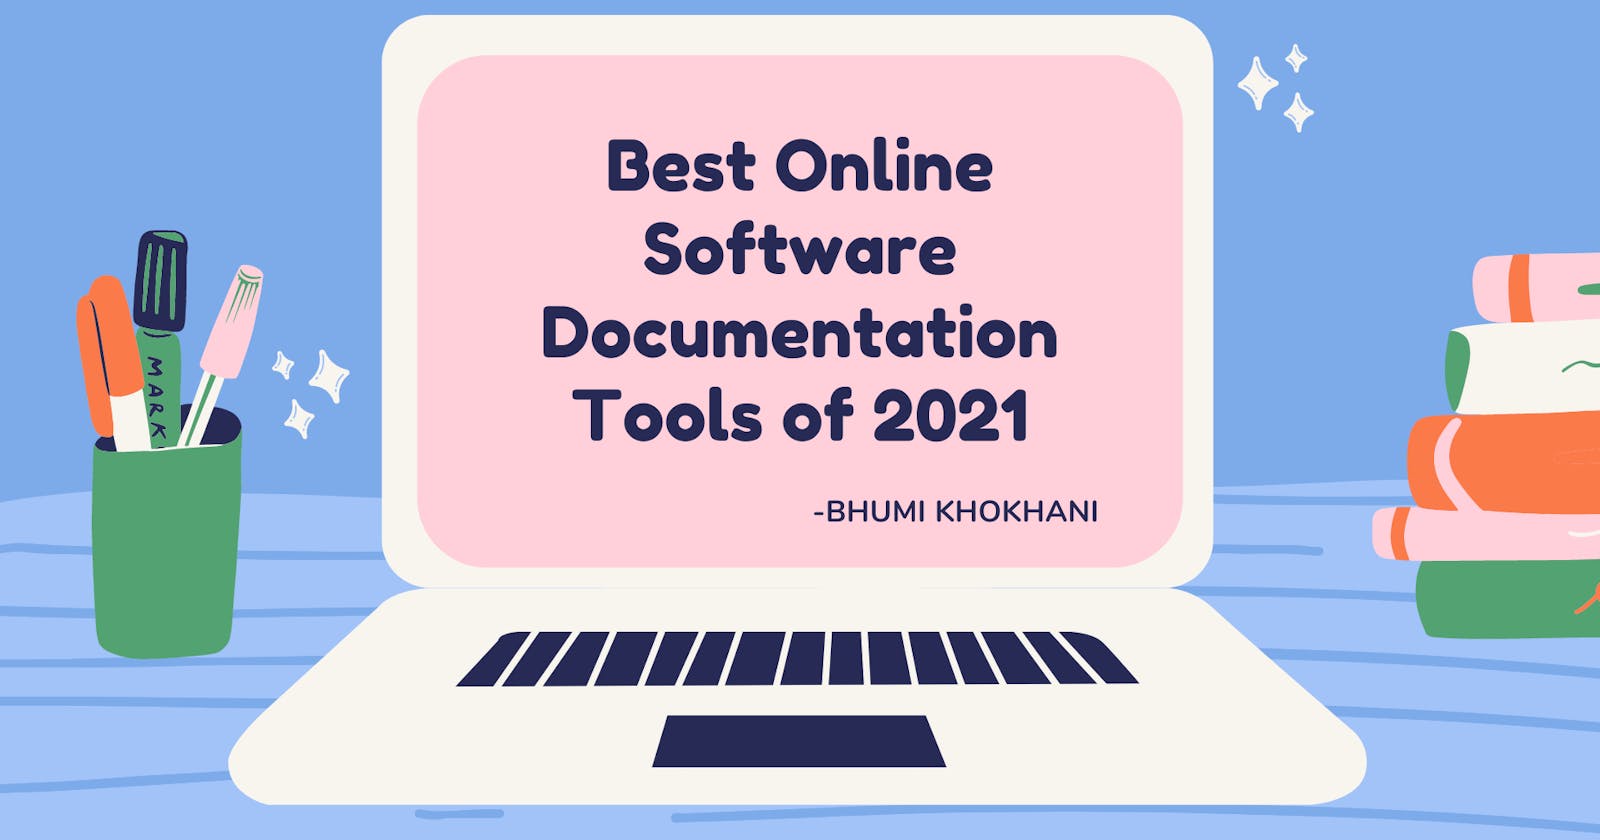 Best Online Software Documentation Tools of 2021